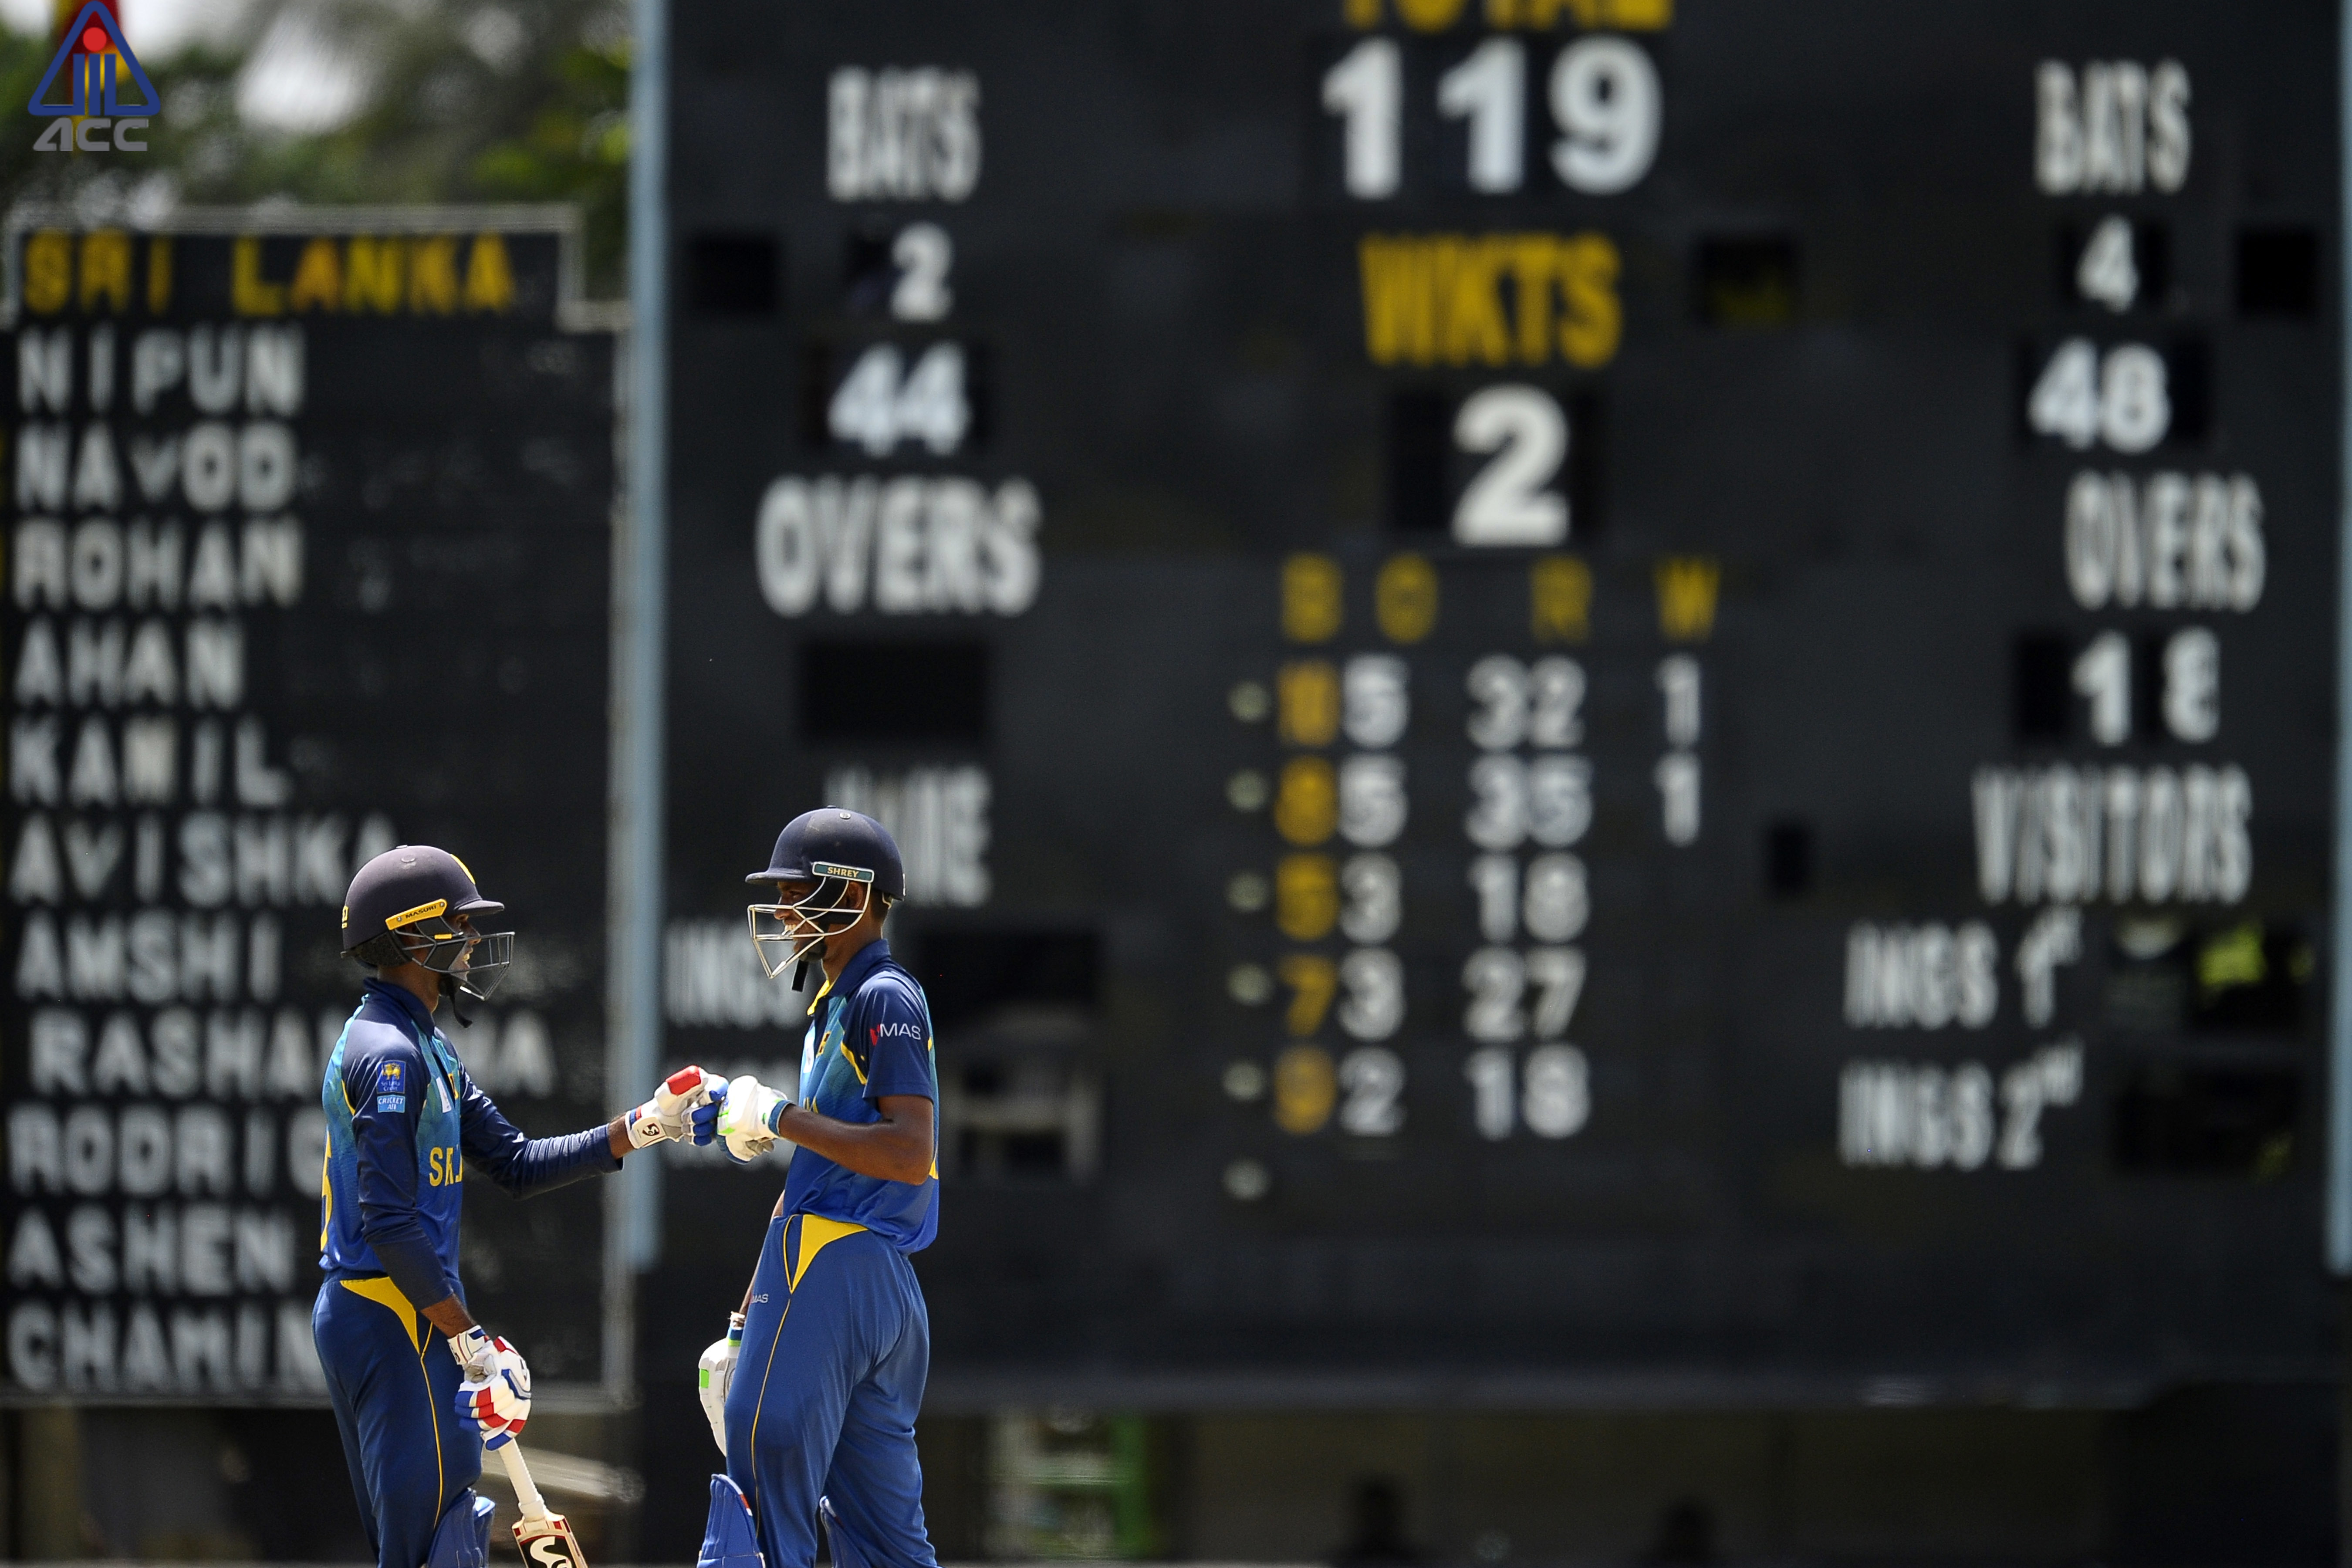 Navod all-round show in Sri Lanka’s 52-run win over UAE